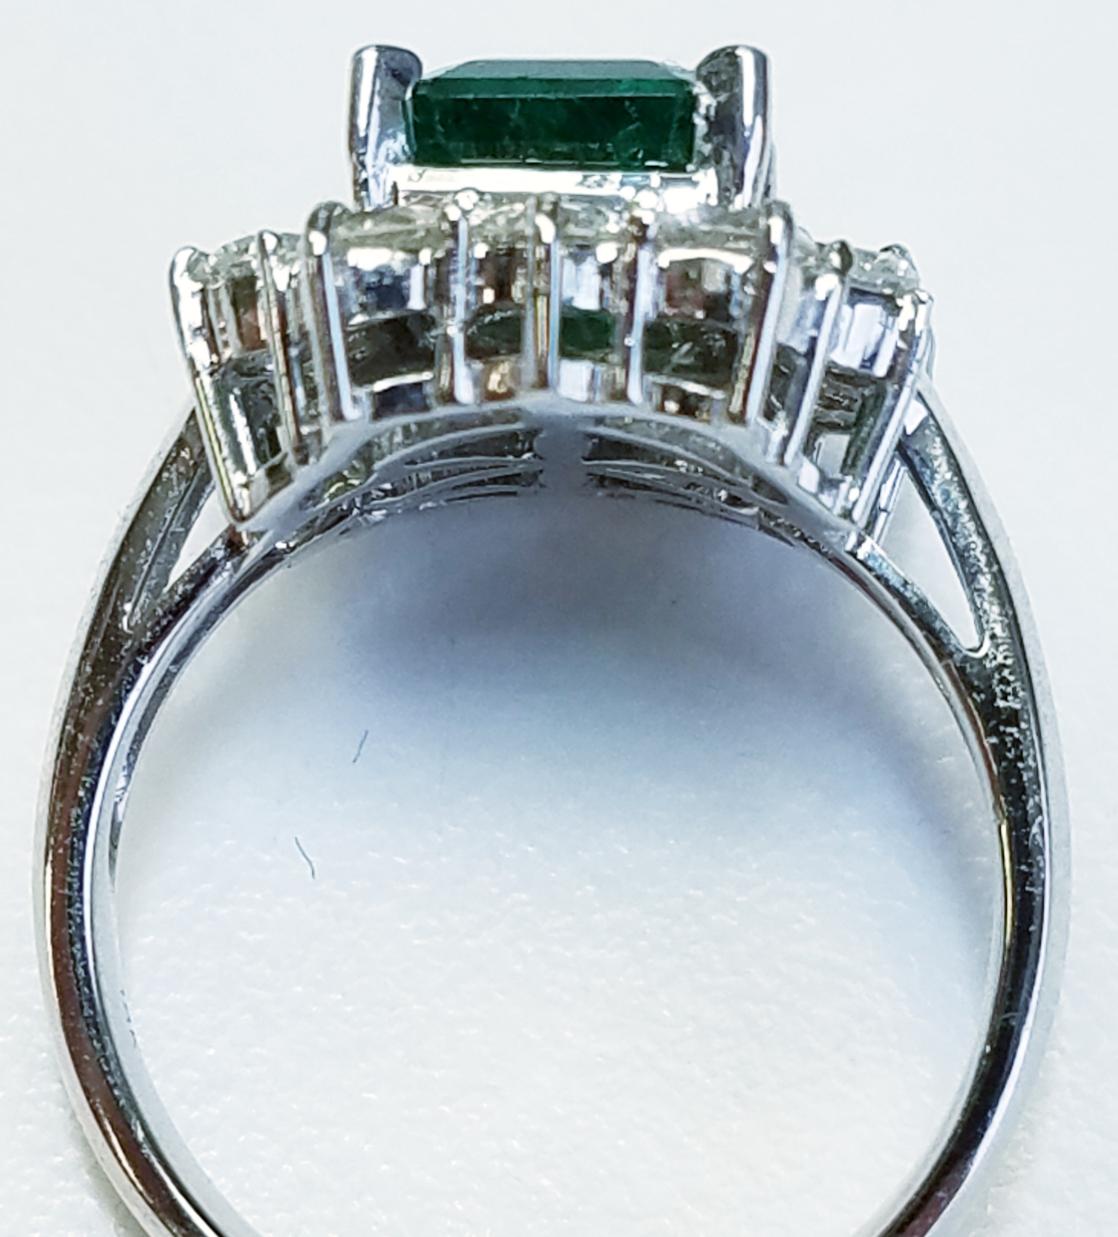 18k White Gold Emerald Cut Emerald and Diamond Ring
1.87 carats of Emeralds
1.30 carats of Diamonds
Emerald cut
18k white gold 